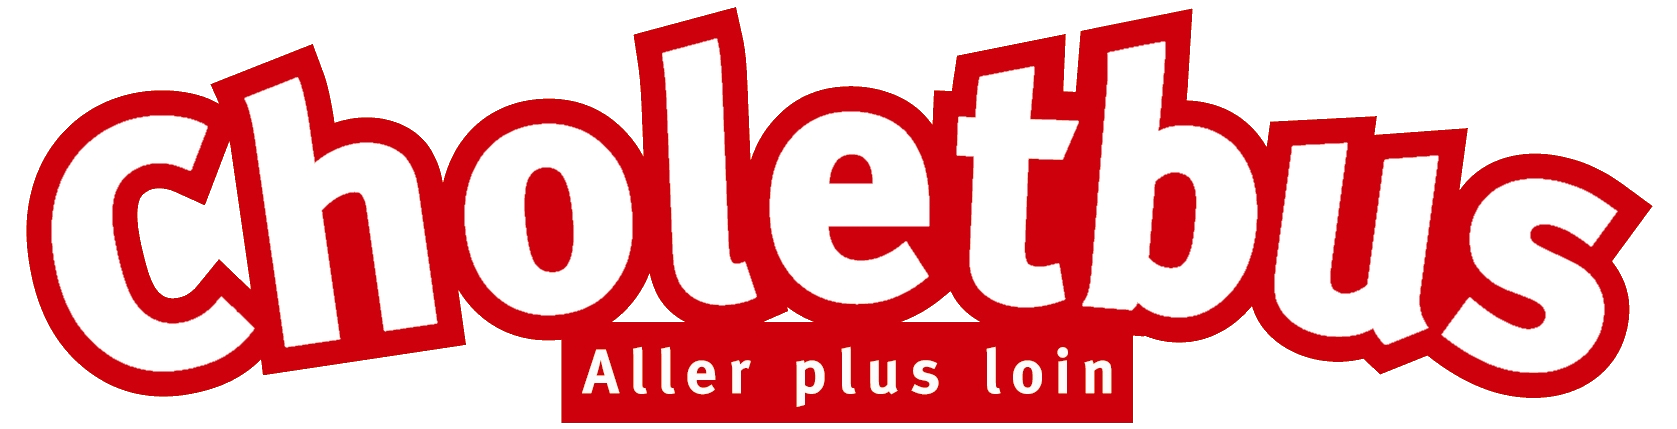 Choletbus logo